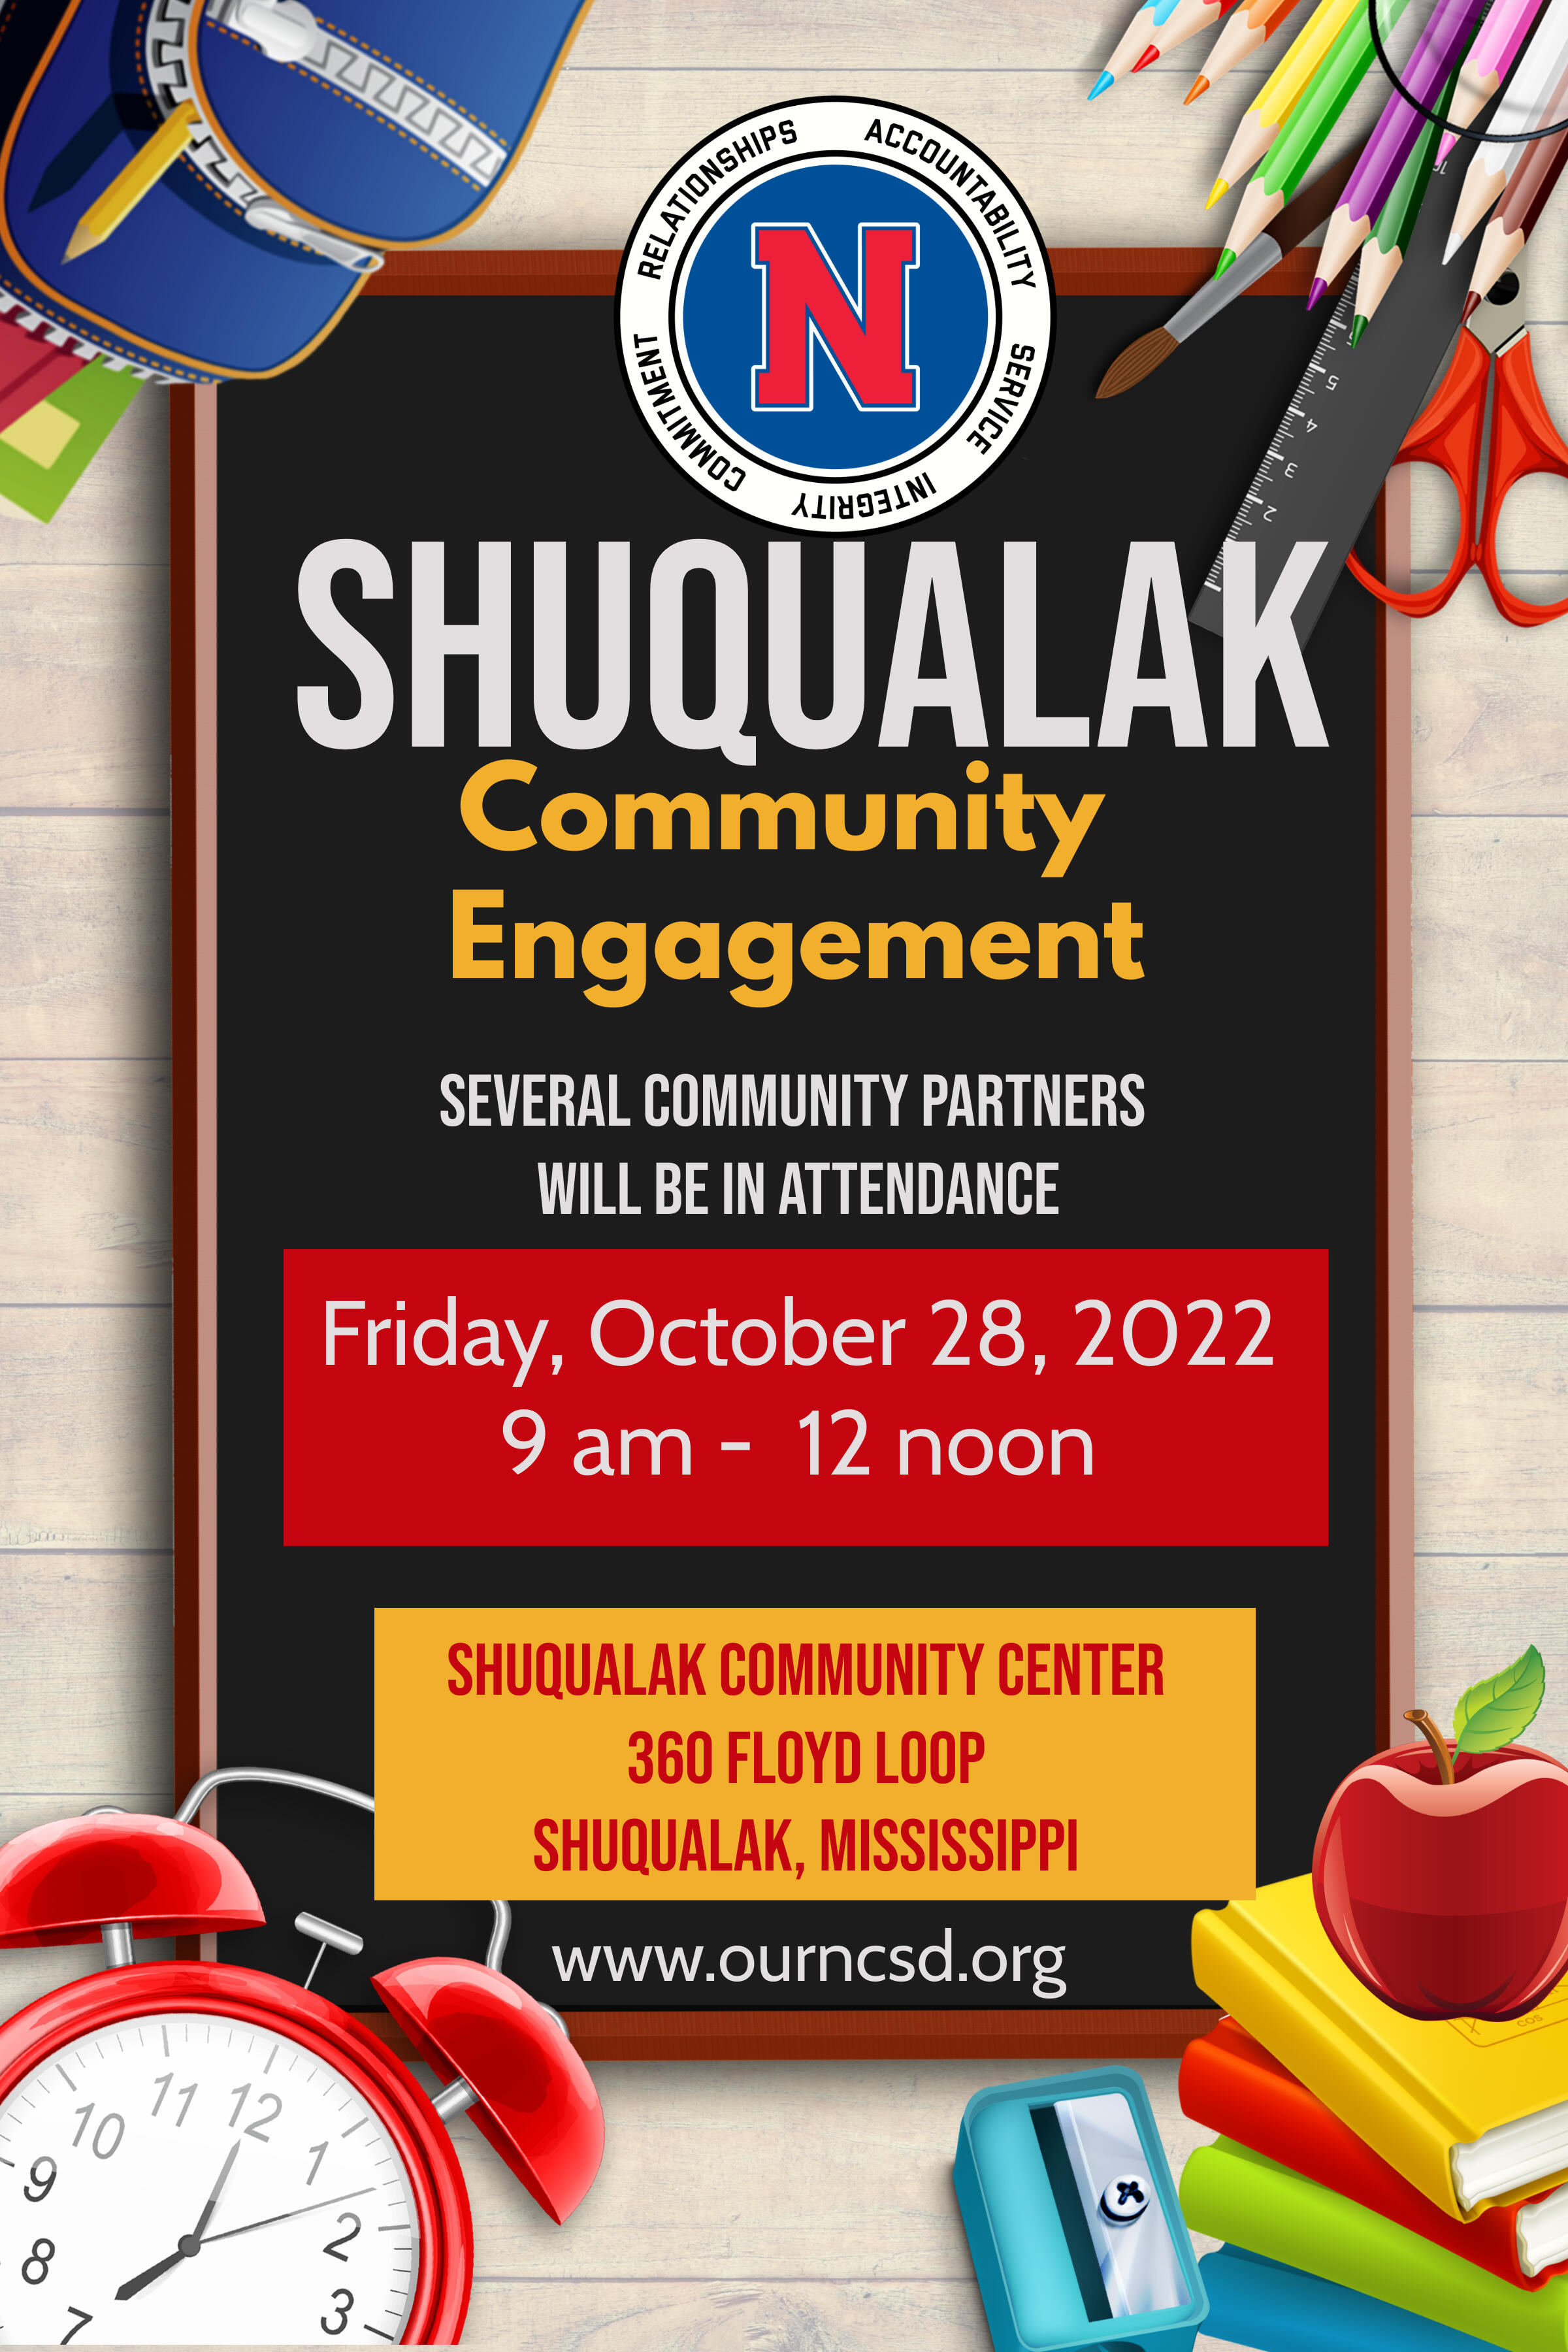 Shuqualak Community Engagement information